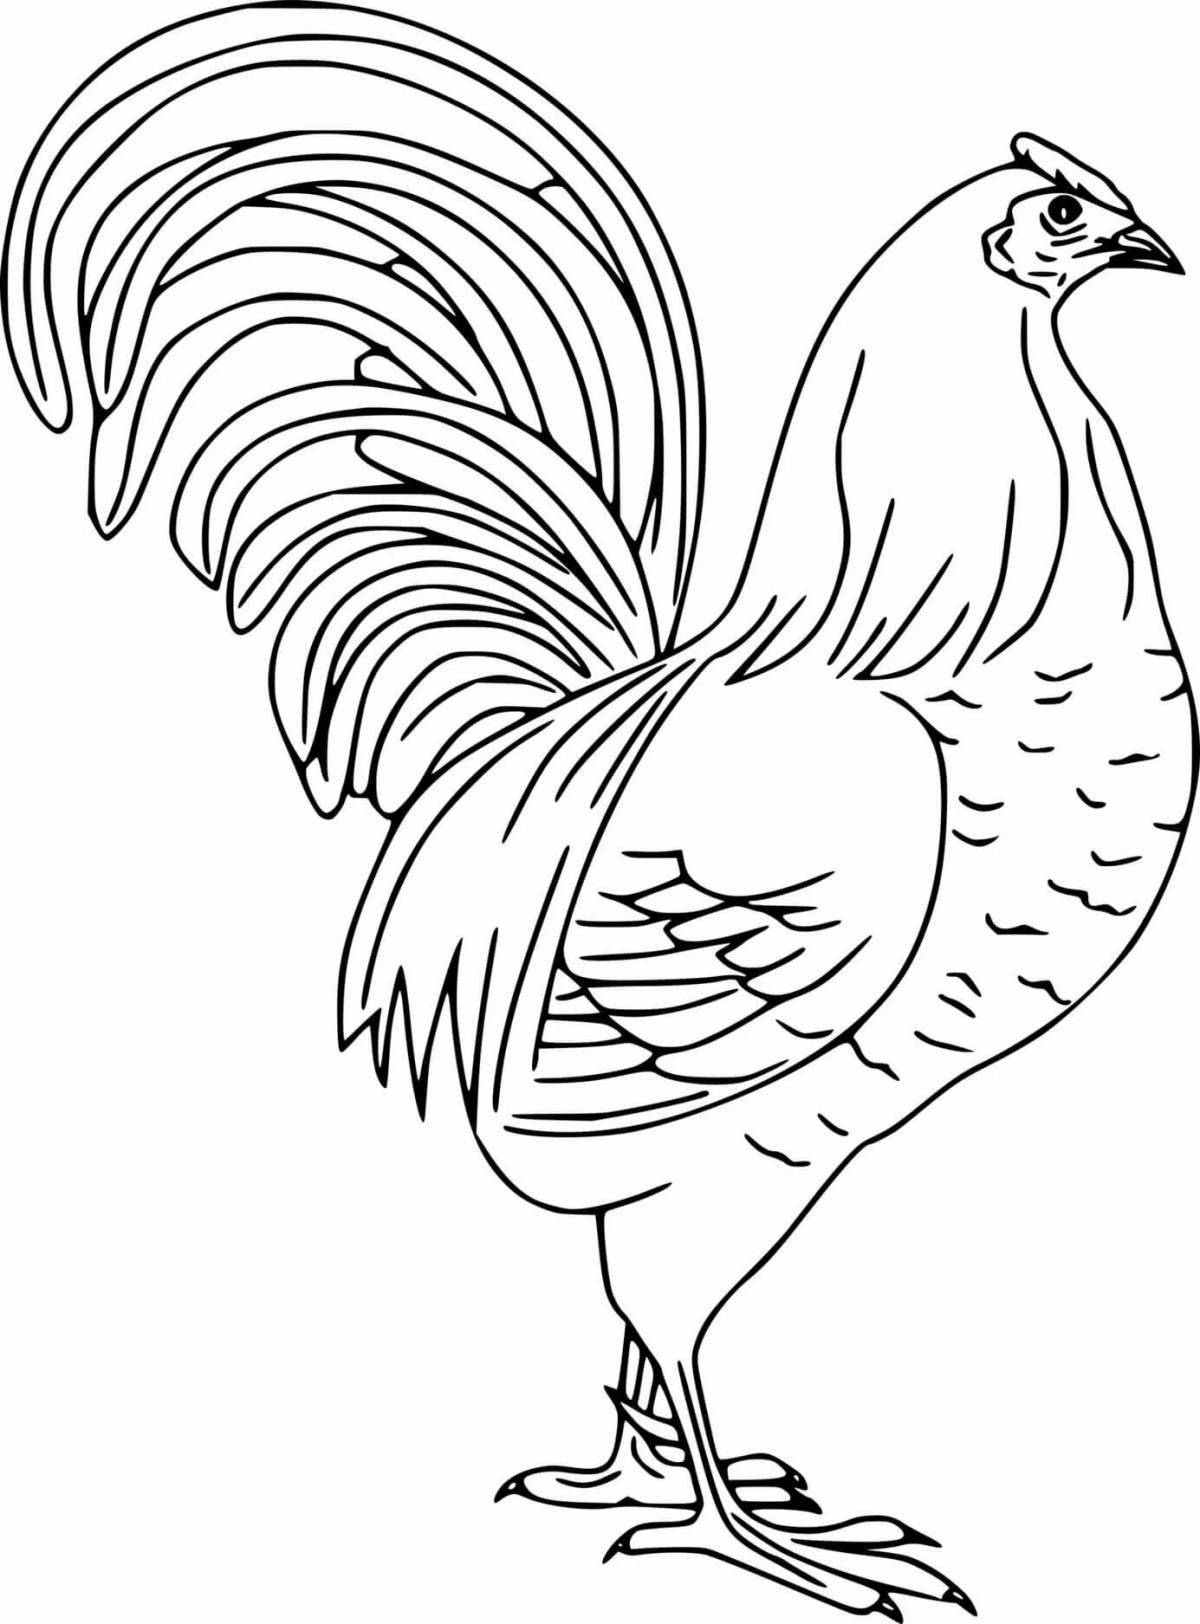 Delightful cockerel drawing